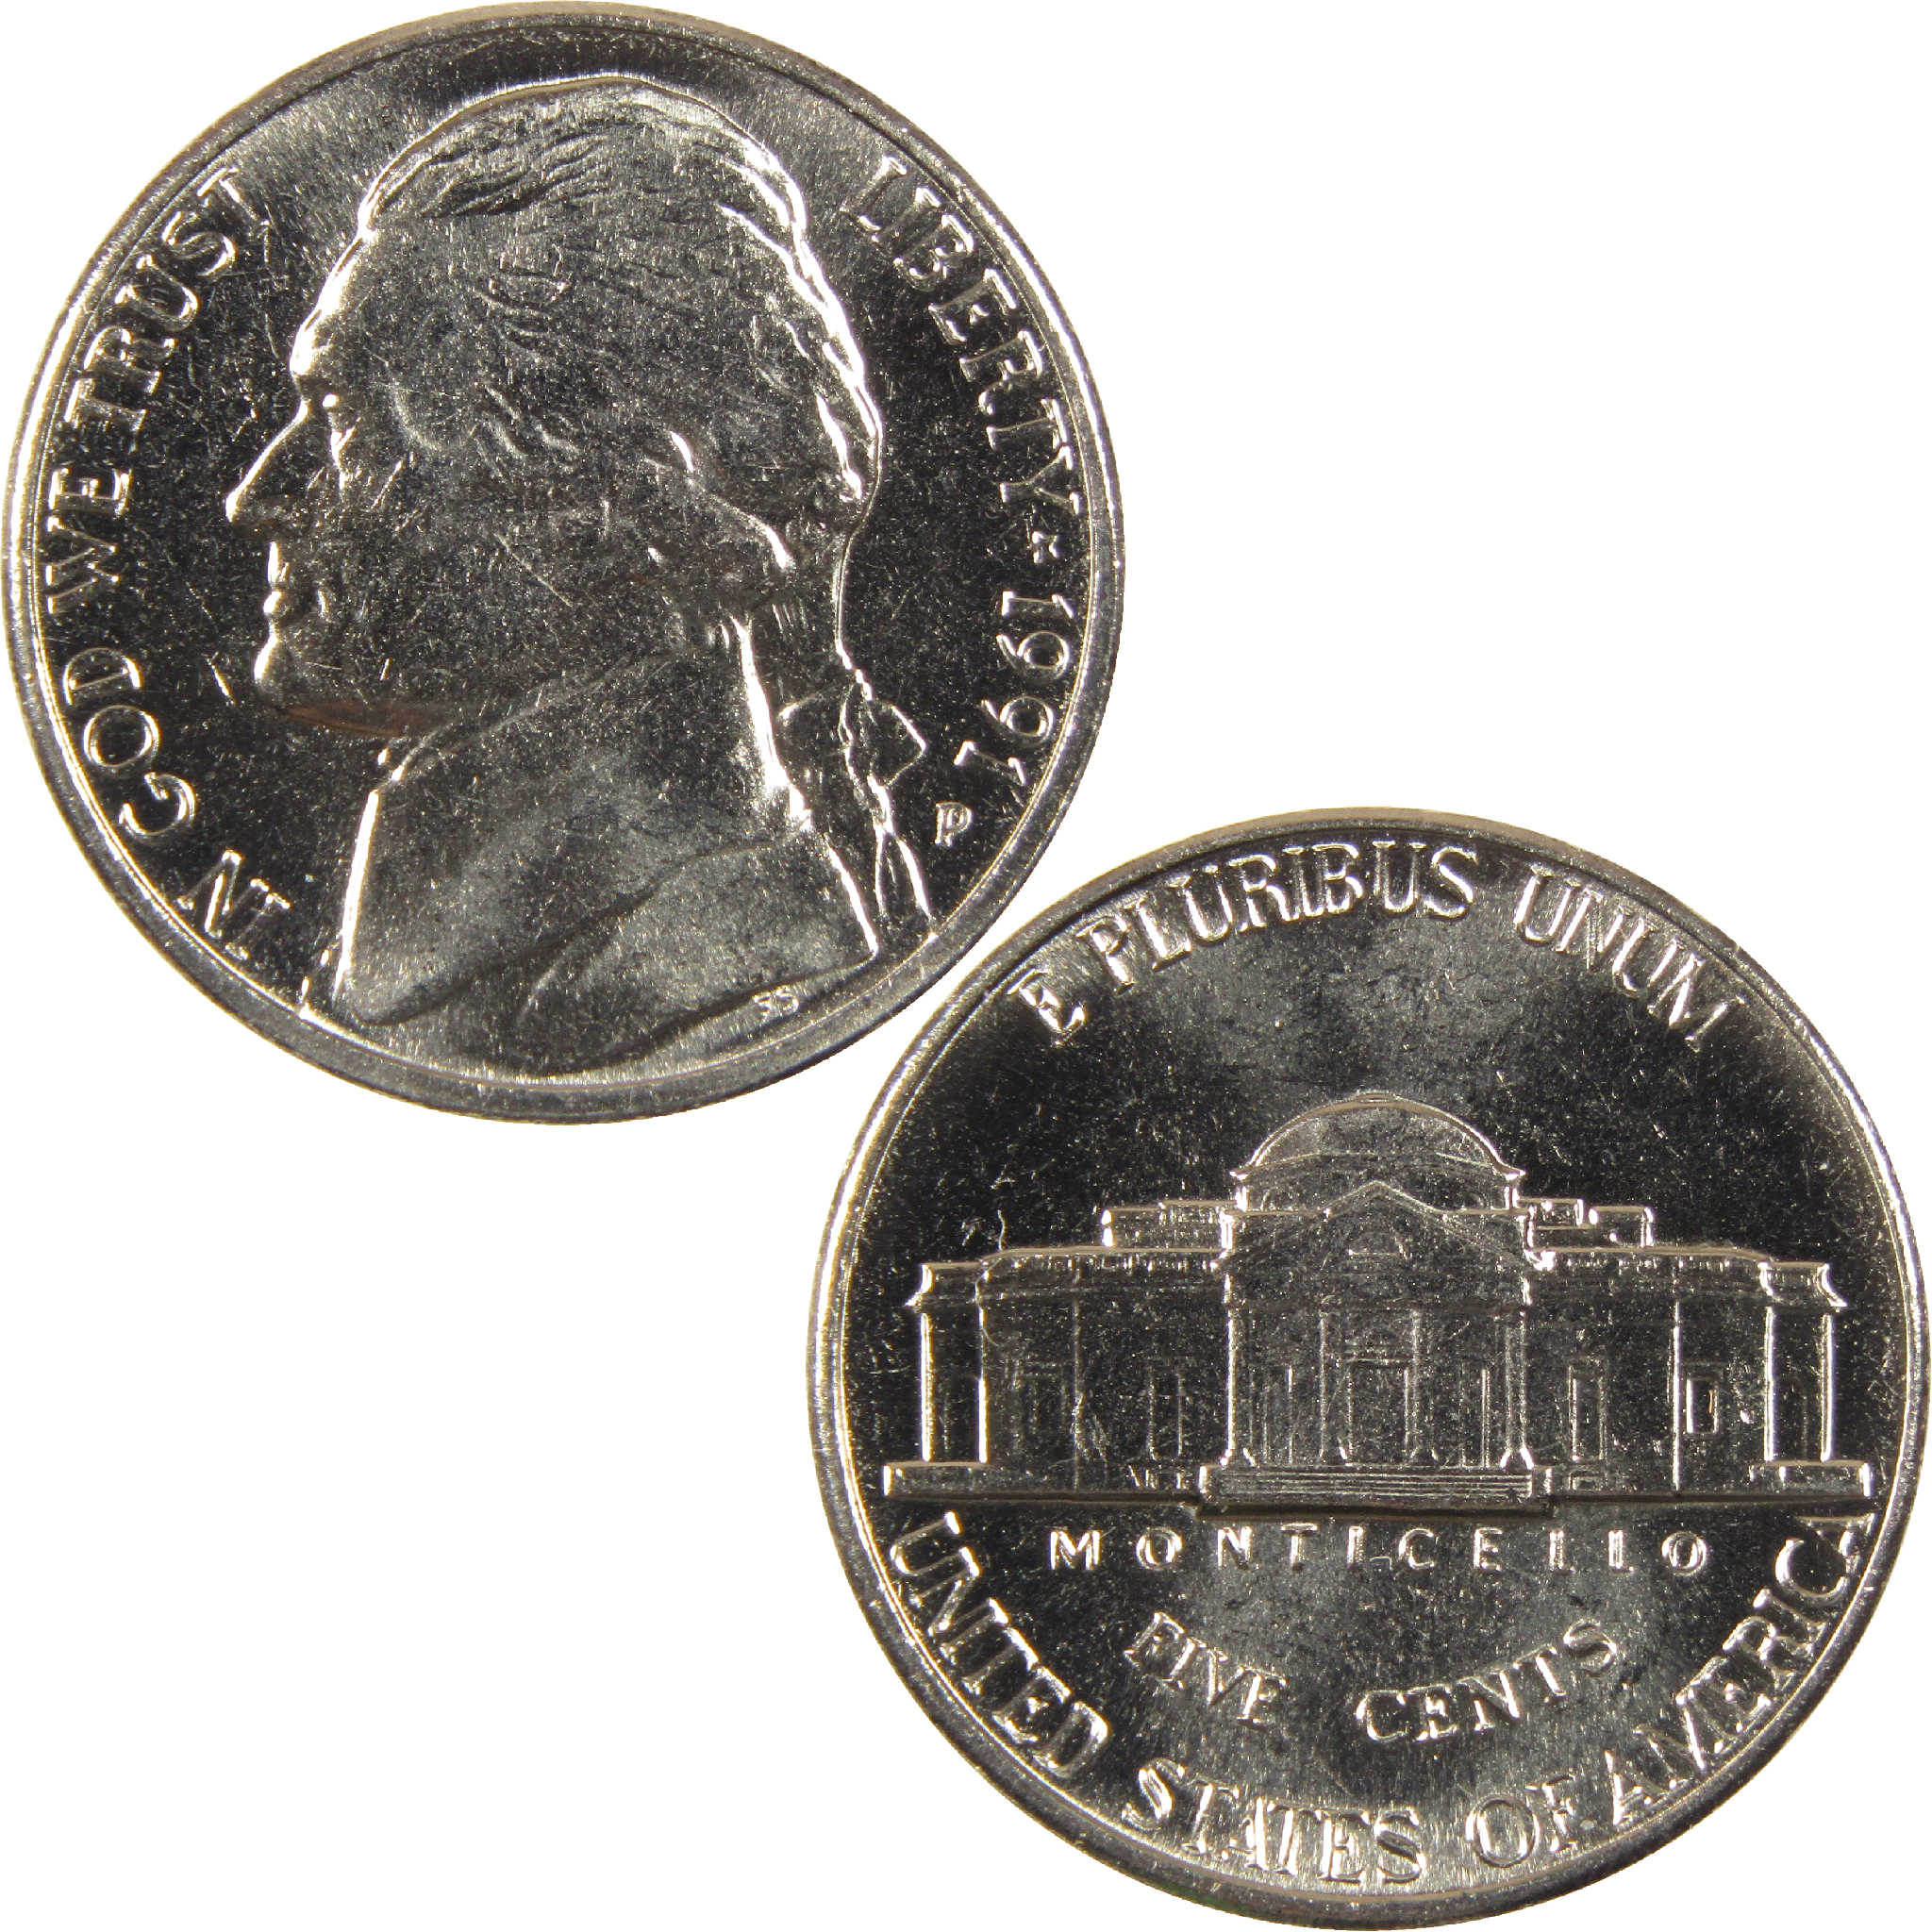 1991 P Jefferson Nickel BU Uncirculated 5c Coin